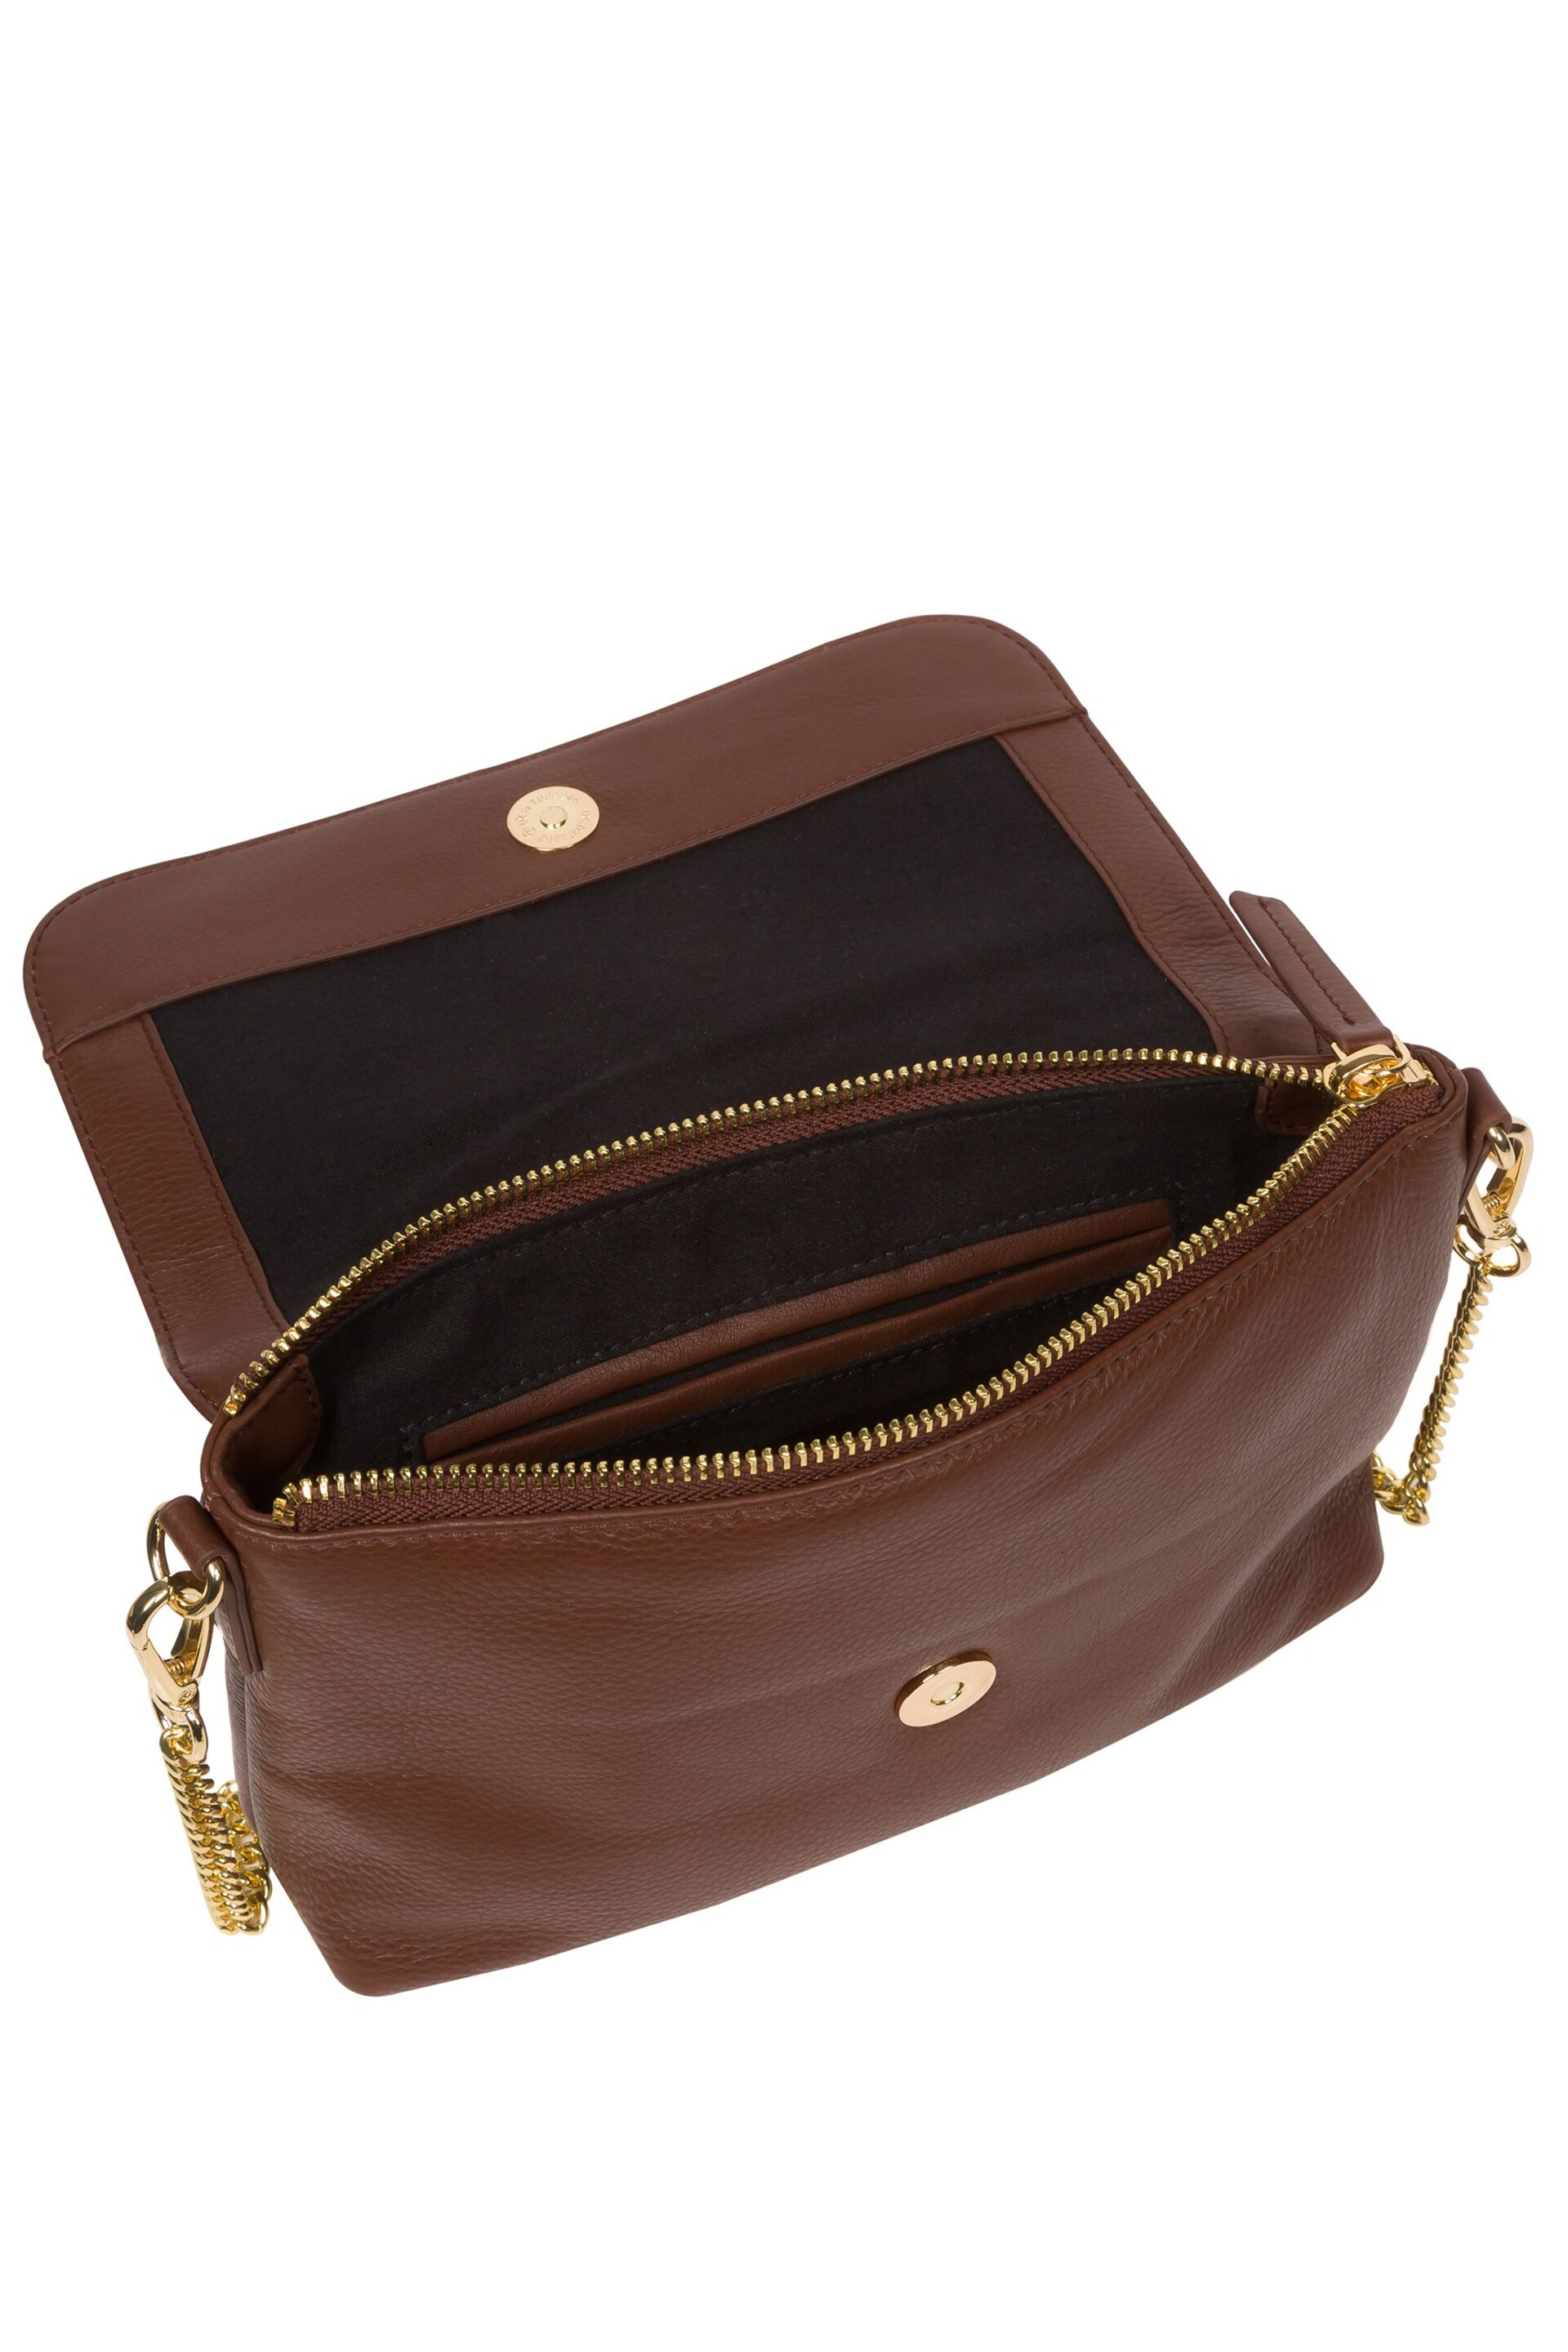 Pure Luxuries London Jazmine Nappa Leather Grab Clutch Bag - Image 4 of 8